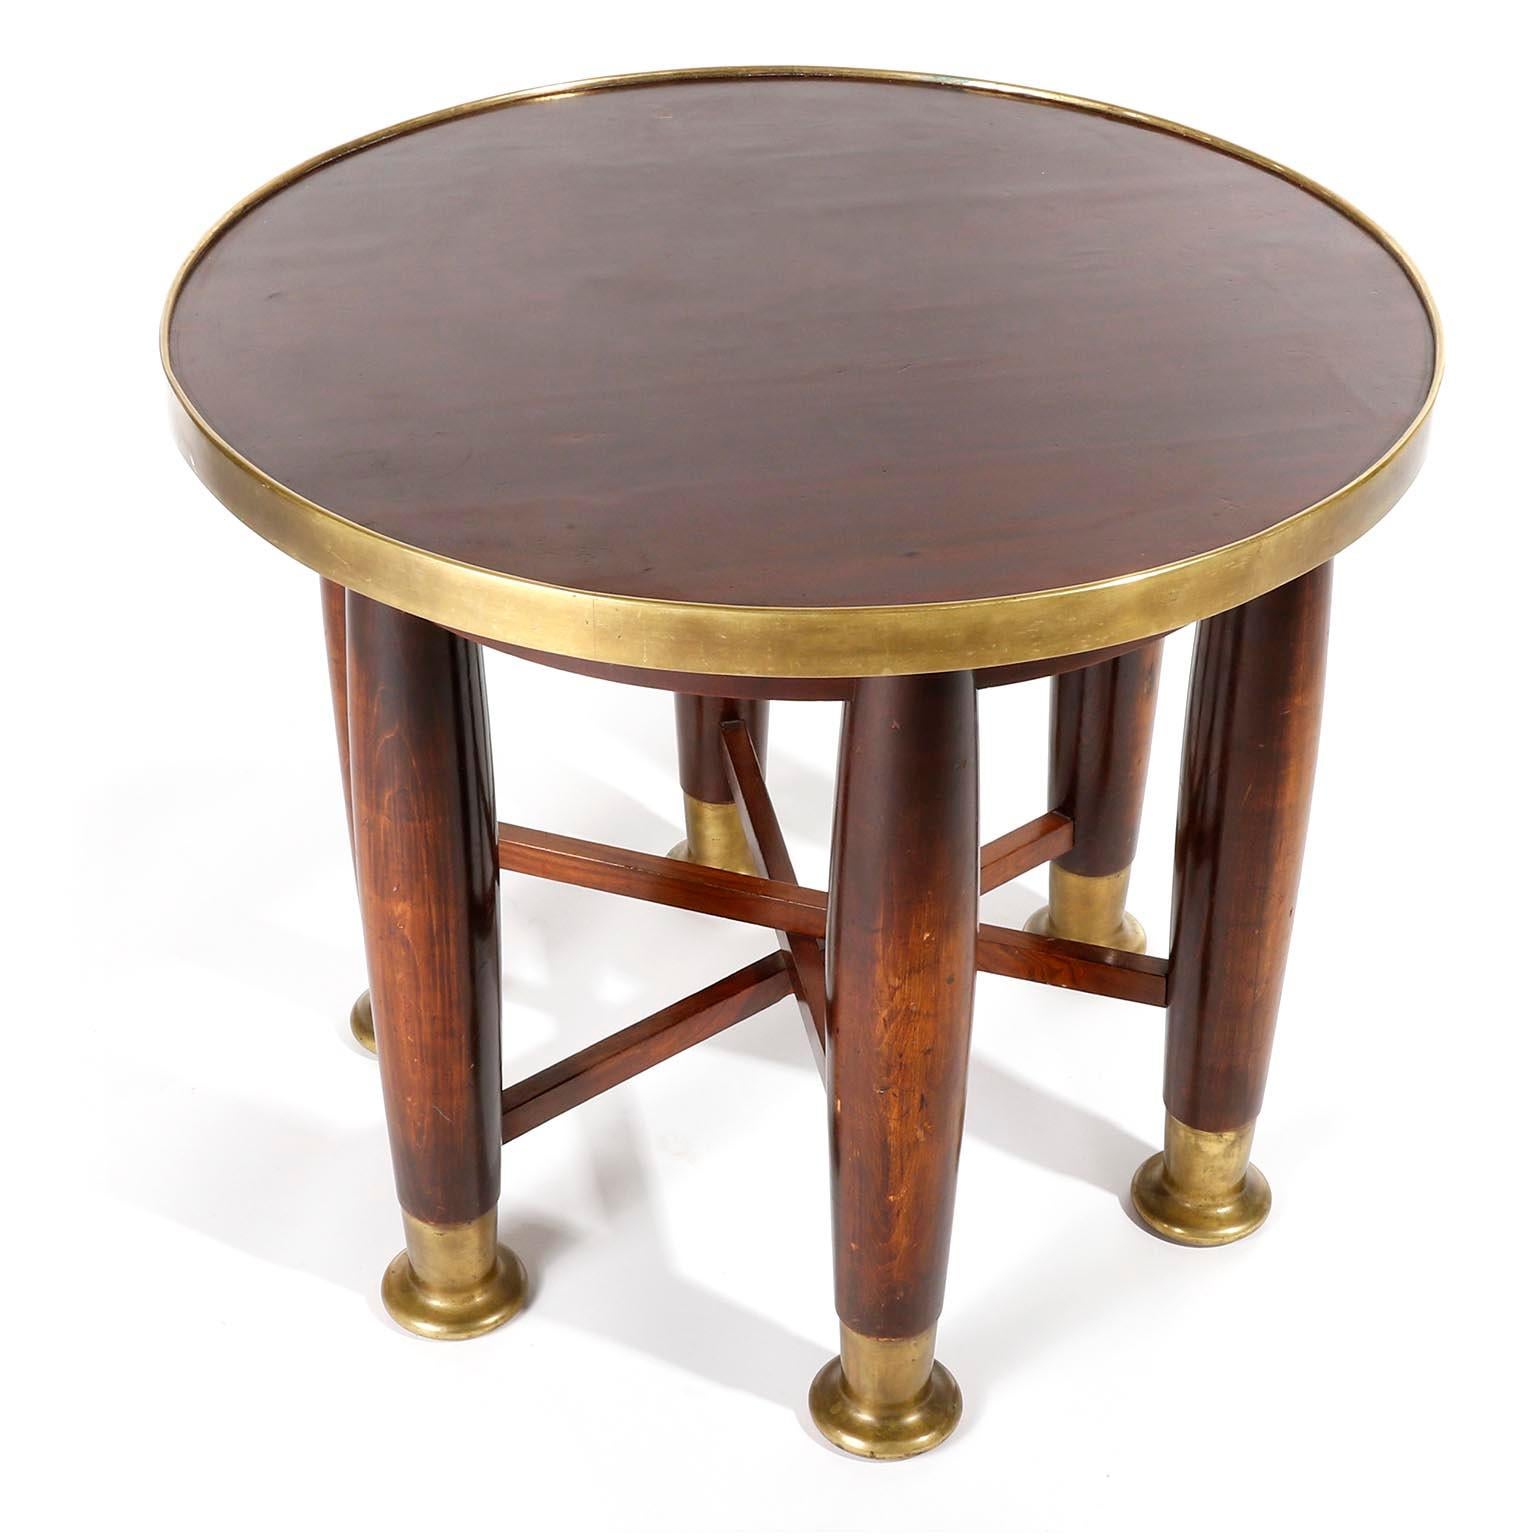 Adolf Loos Six-Legged 'Haberfeld' Table, F.O. Schmidt, Brass Wood, Austria, 1899 In Good Condition For Sale In Hausmannstätten, AT